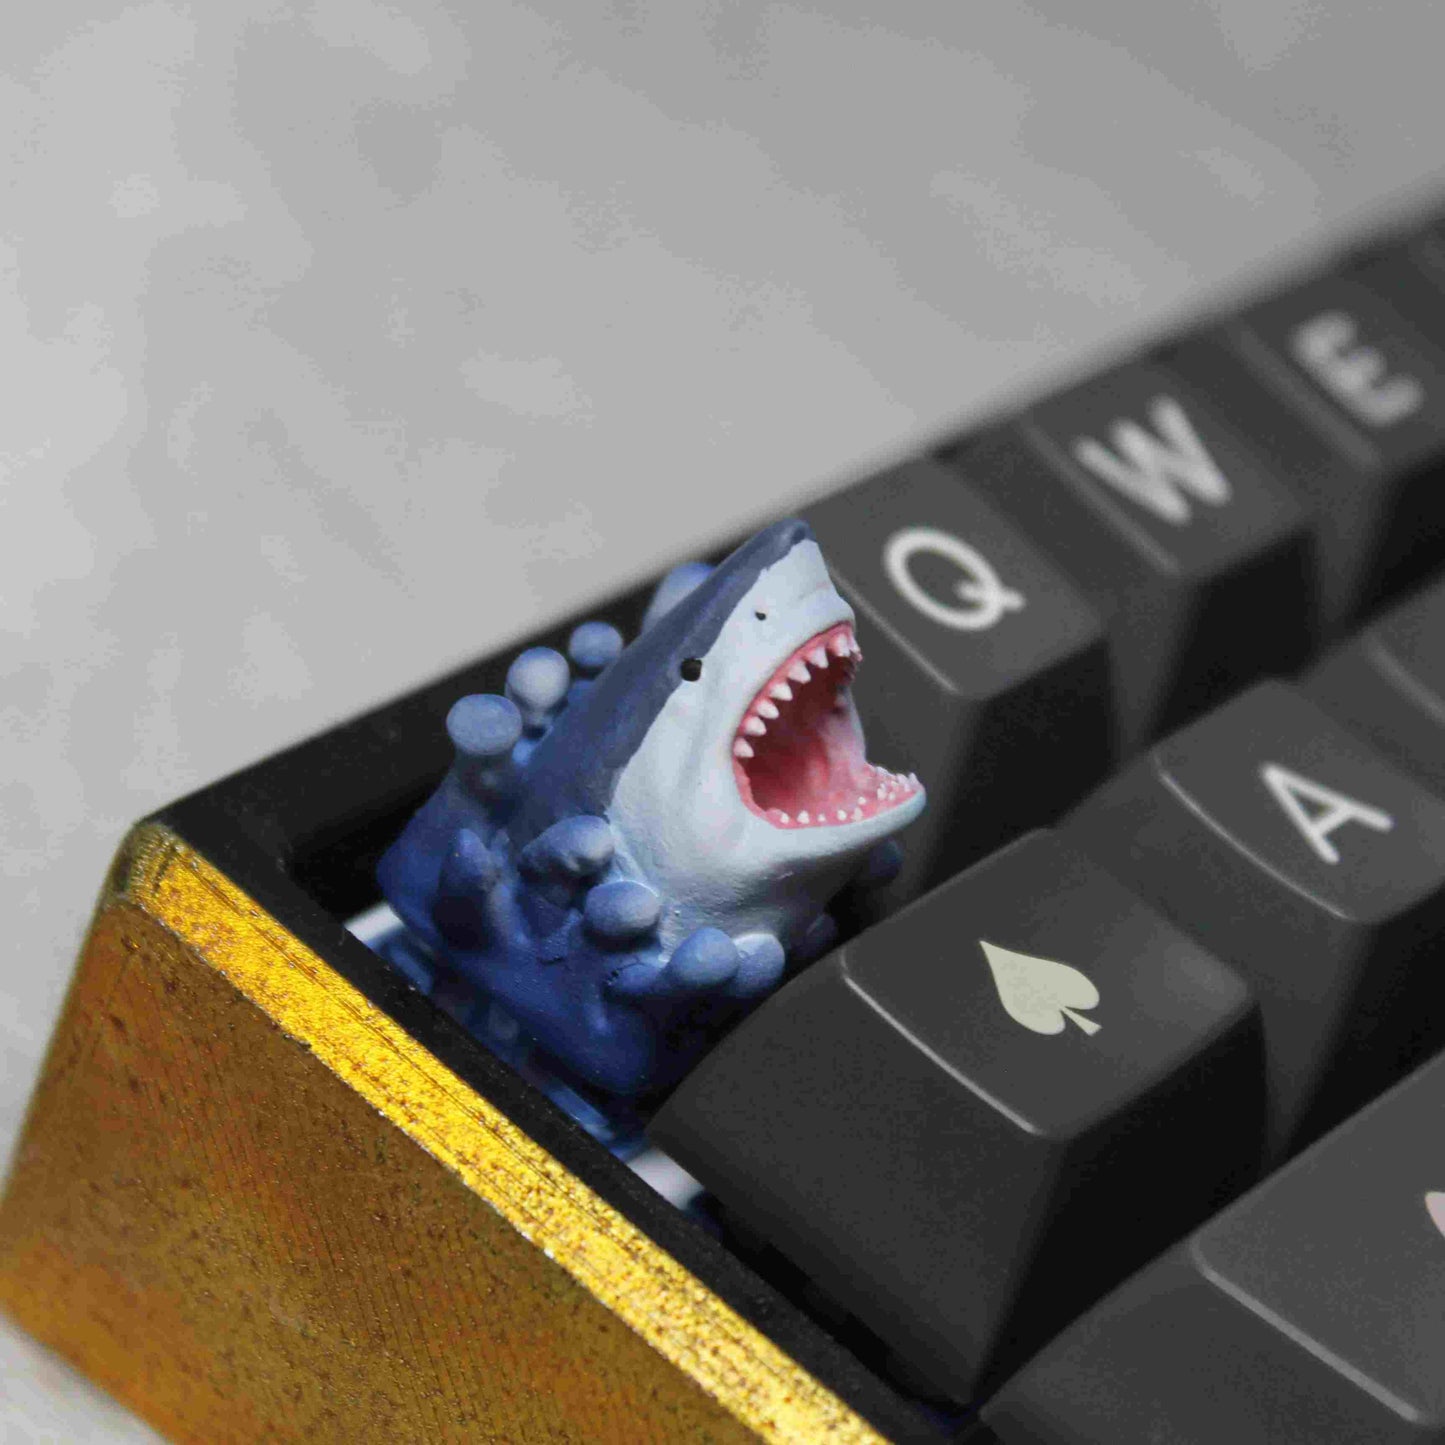 Jaws Custom Artisan Keycaps grimacing shark keycaps